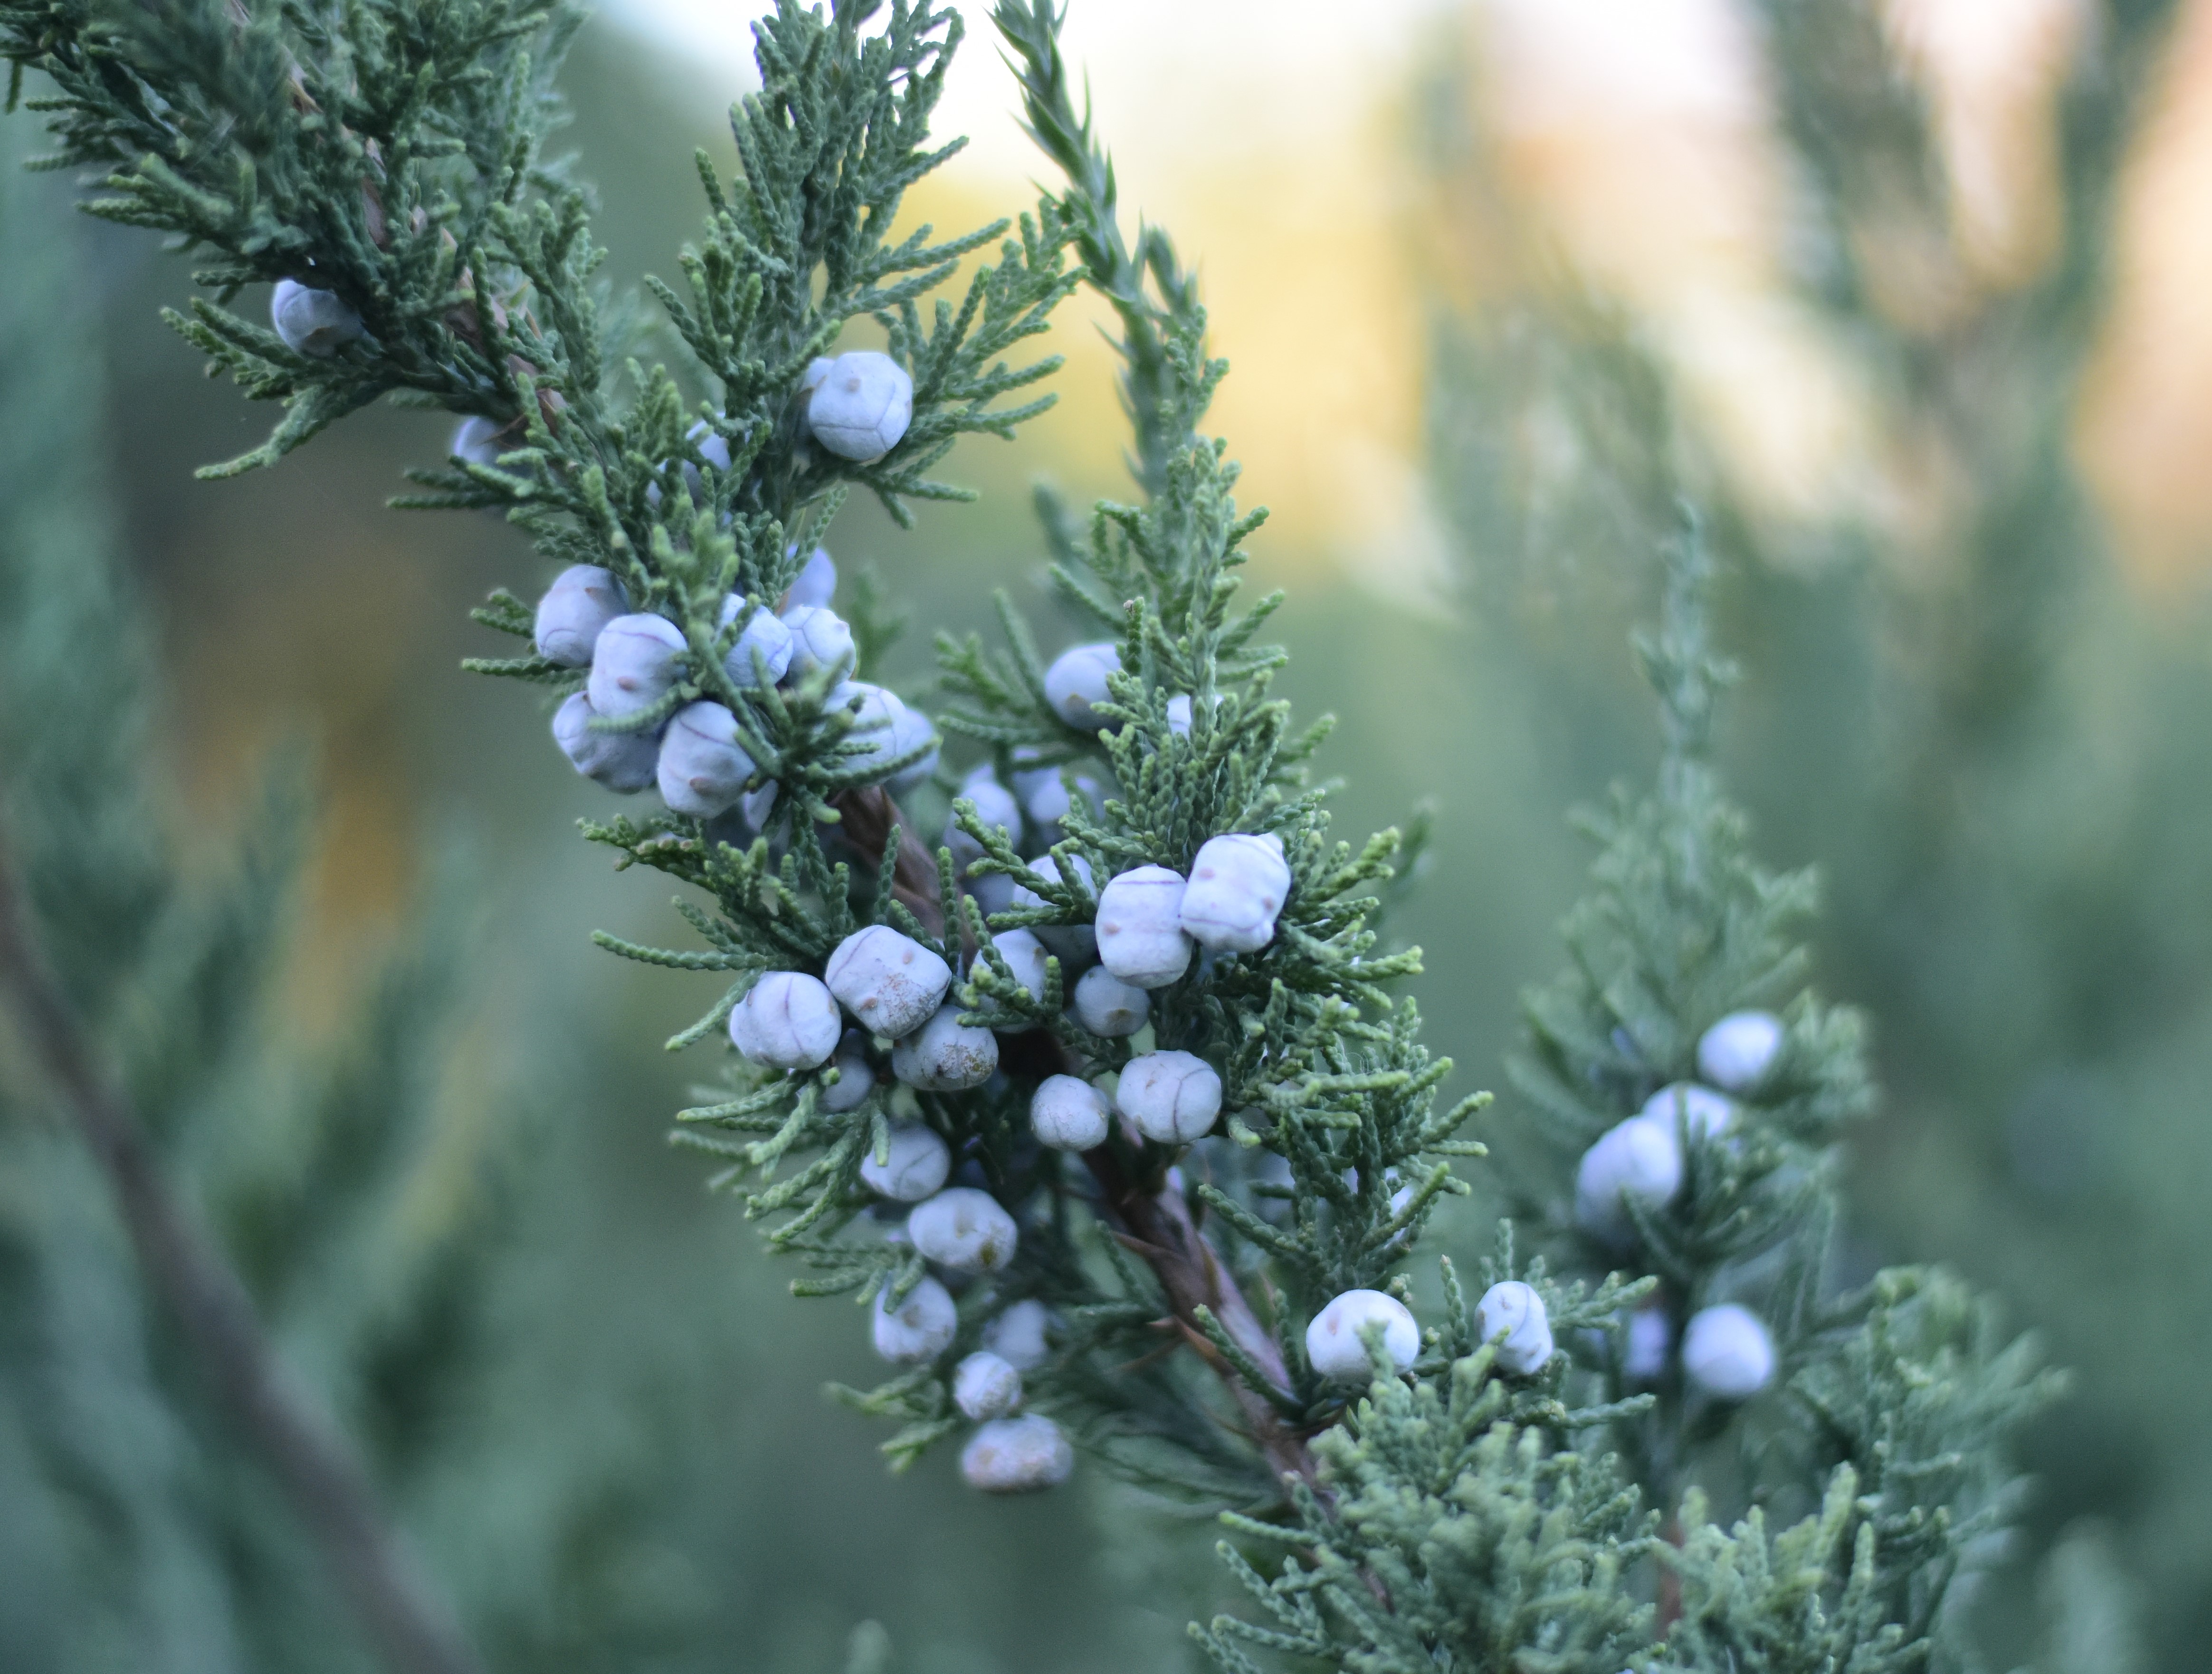 Juniperus chinensis 'Maney'